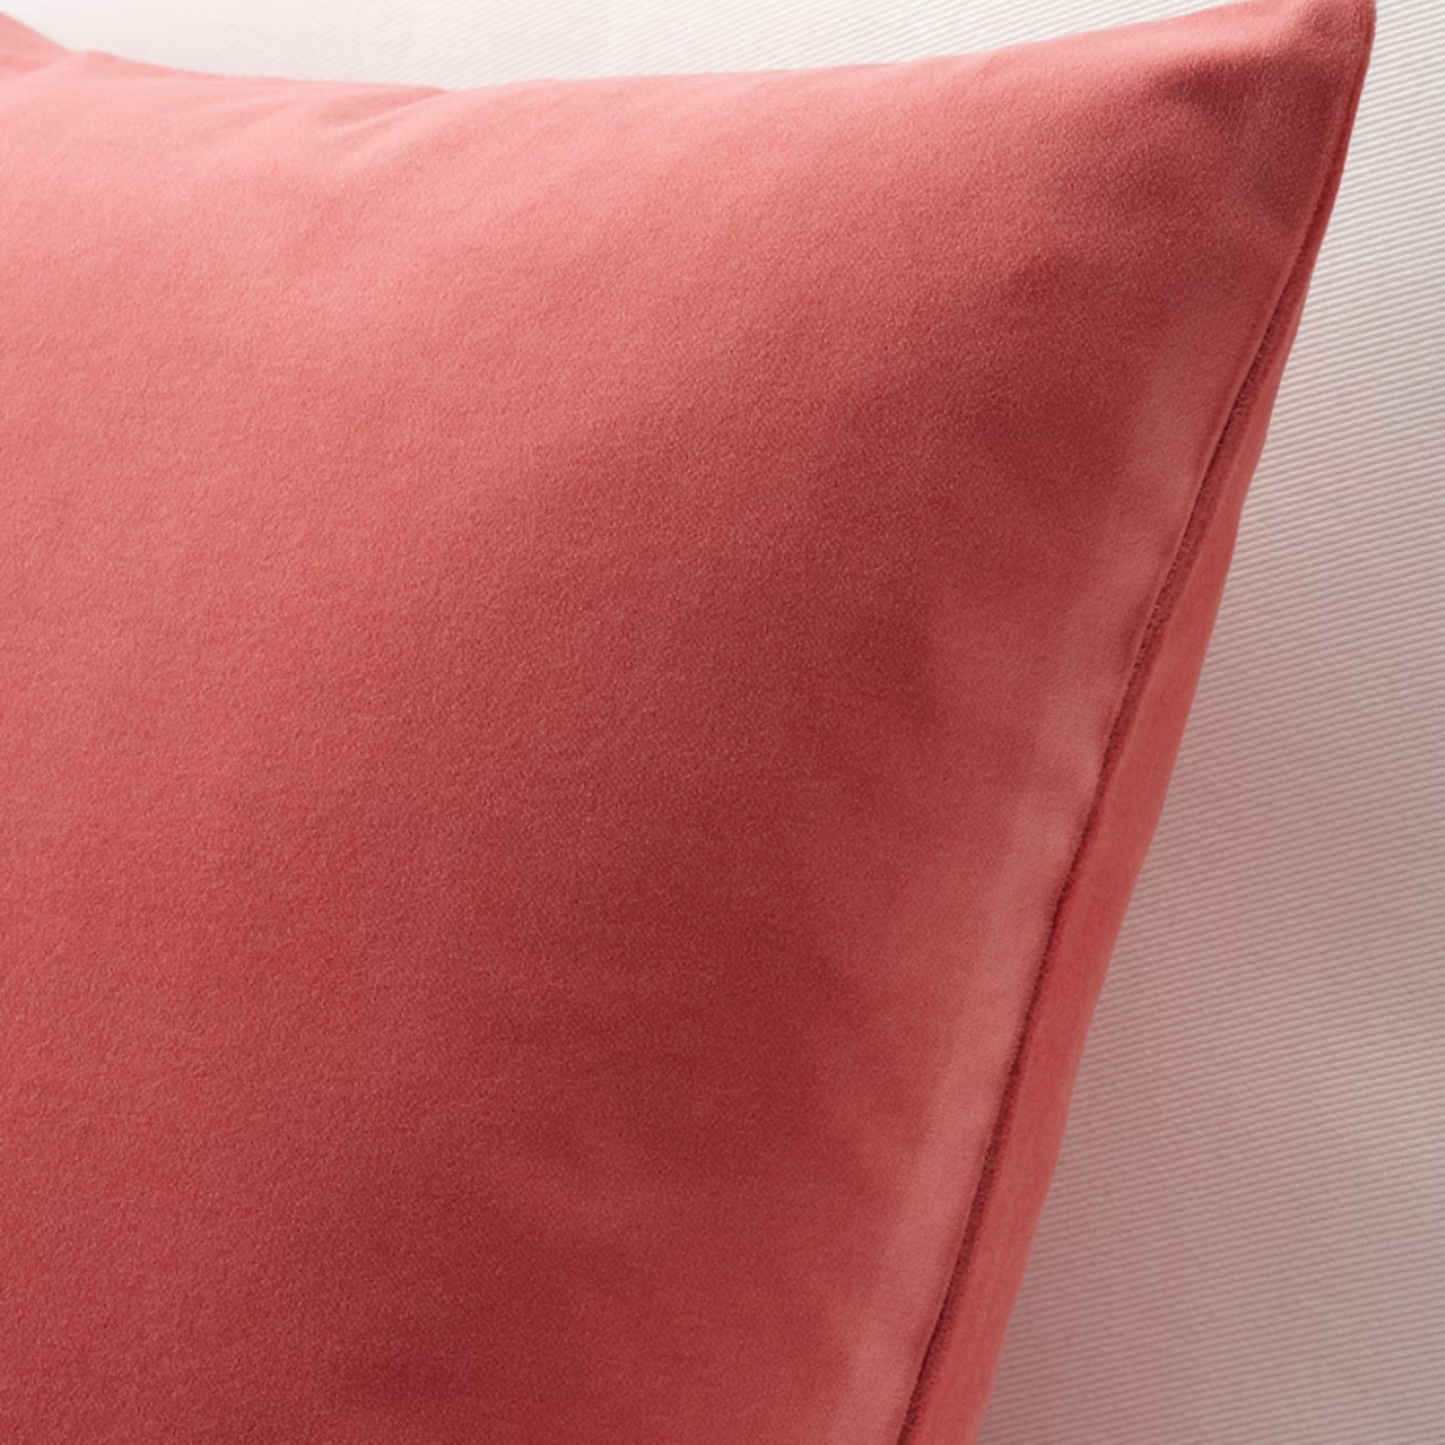 Ikea Sanela Cushion Cover 65x65cm, Light Brown-Red (8572961915167)